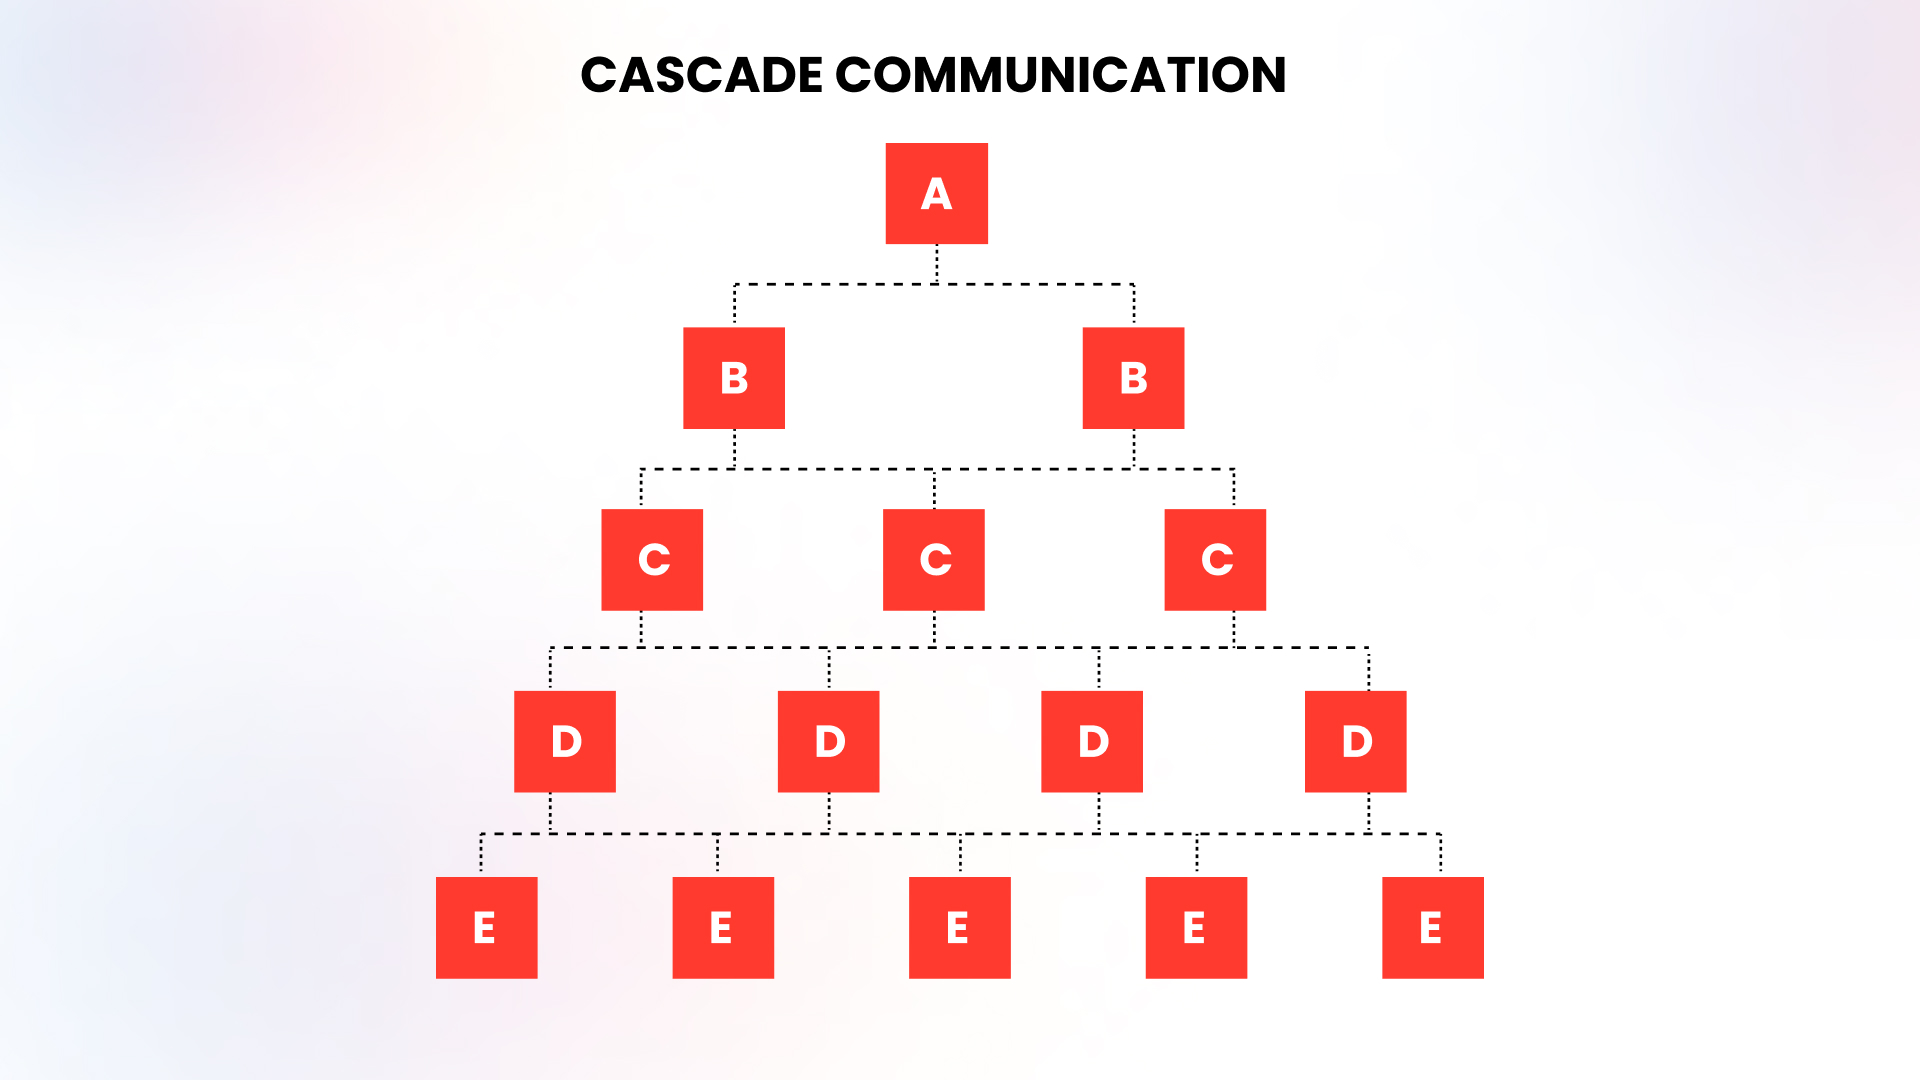 How communication cascades.